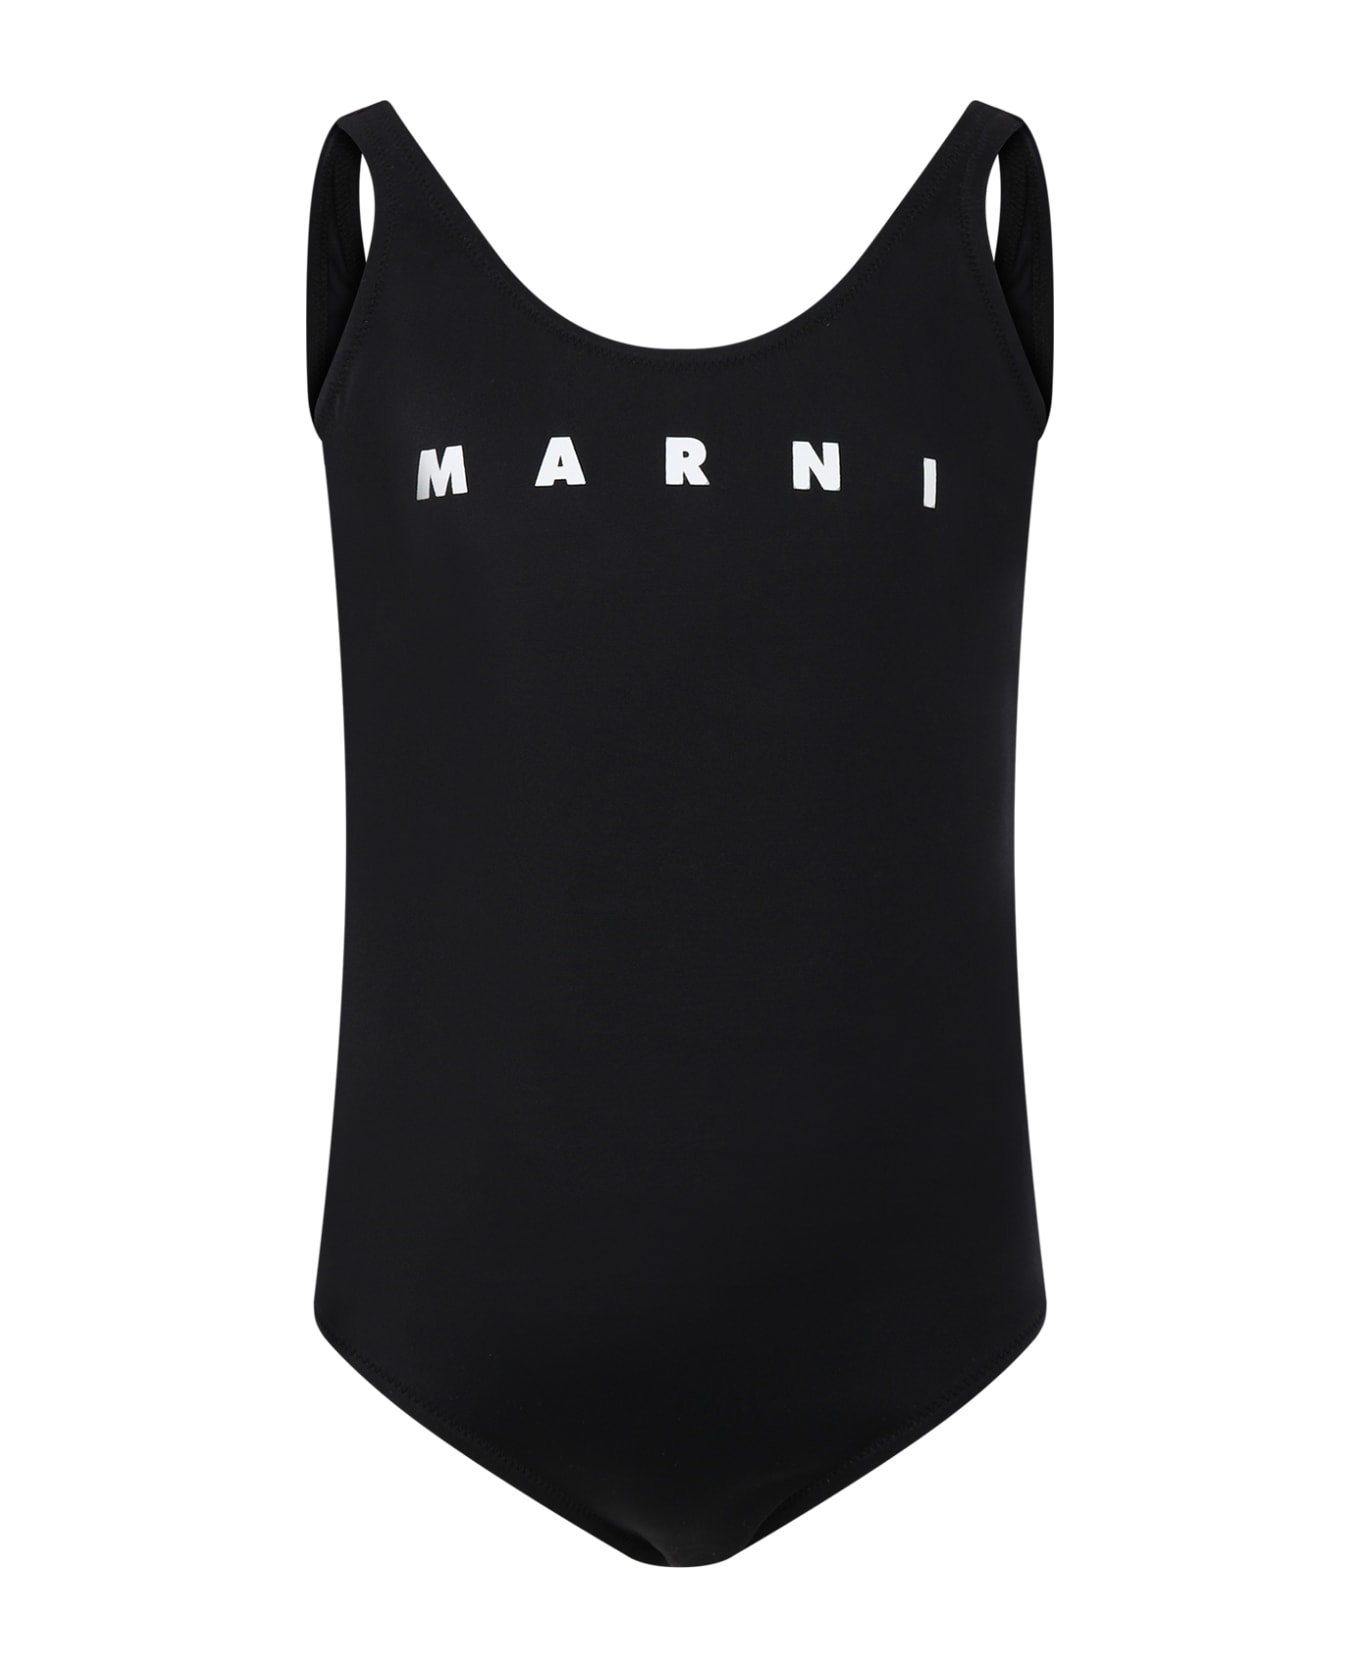 Marni Black Swimsuit For Girl With Logo - Black